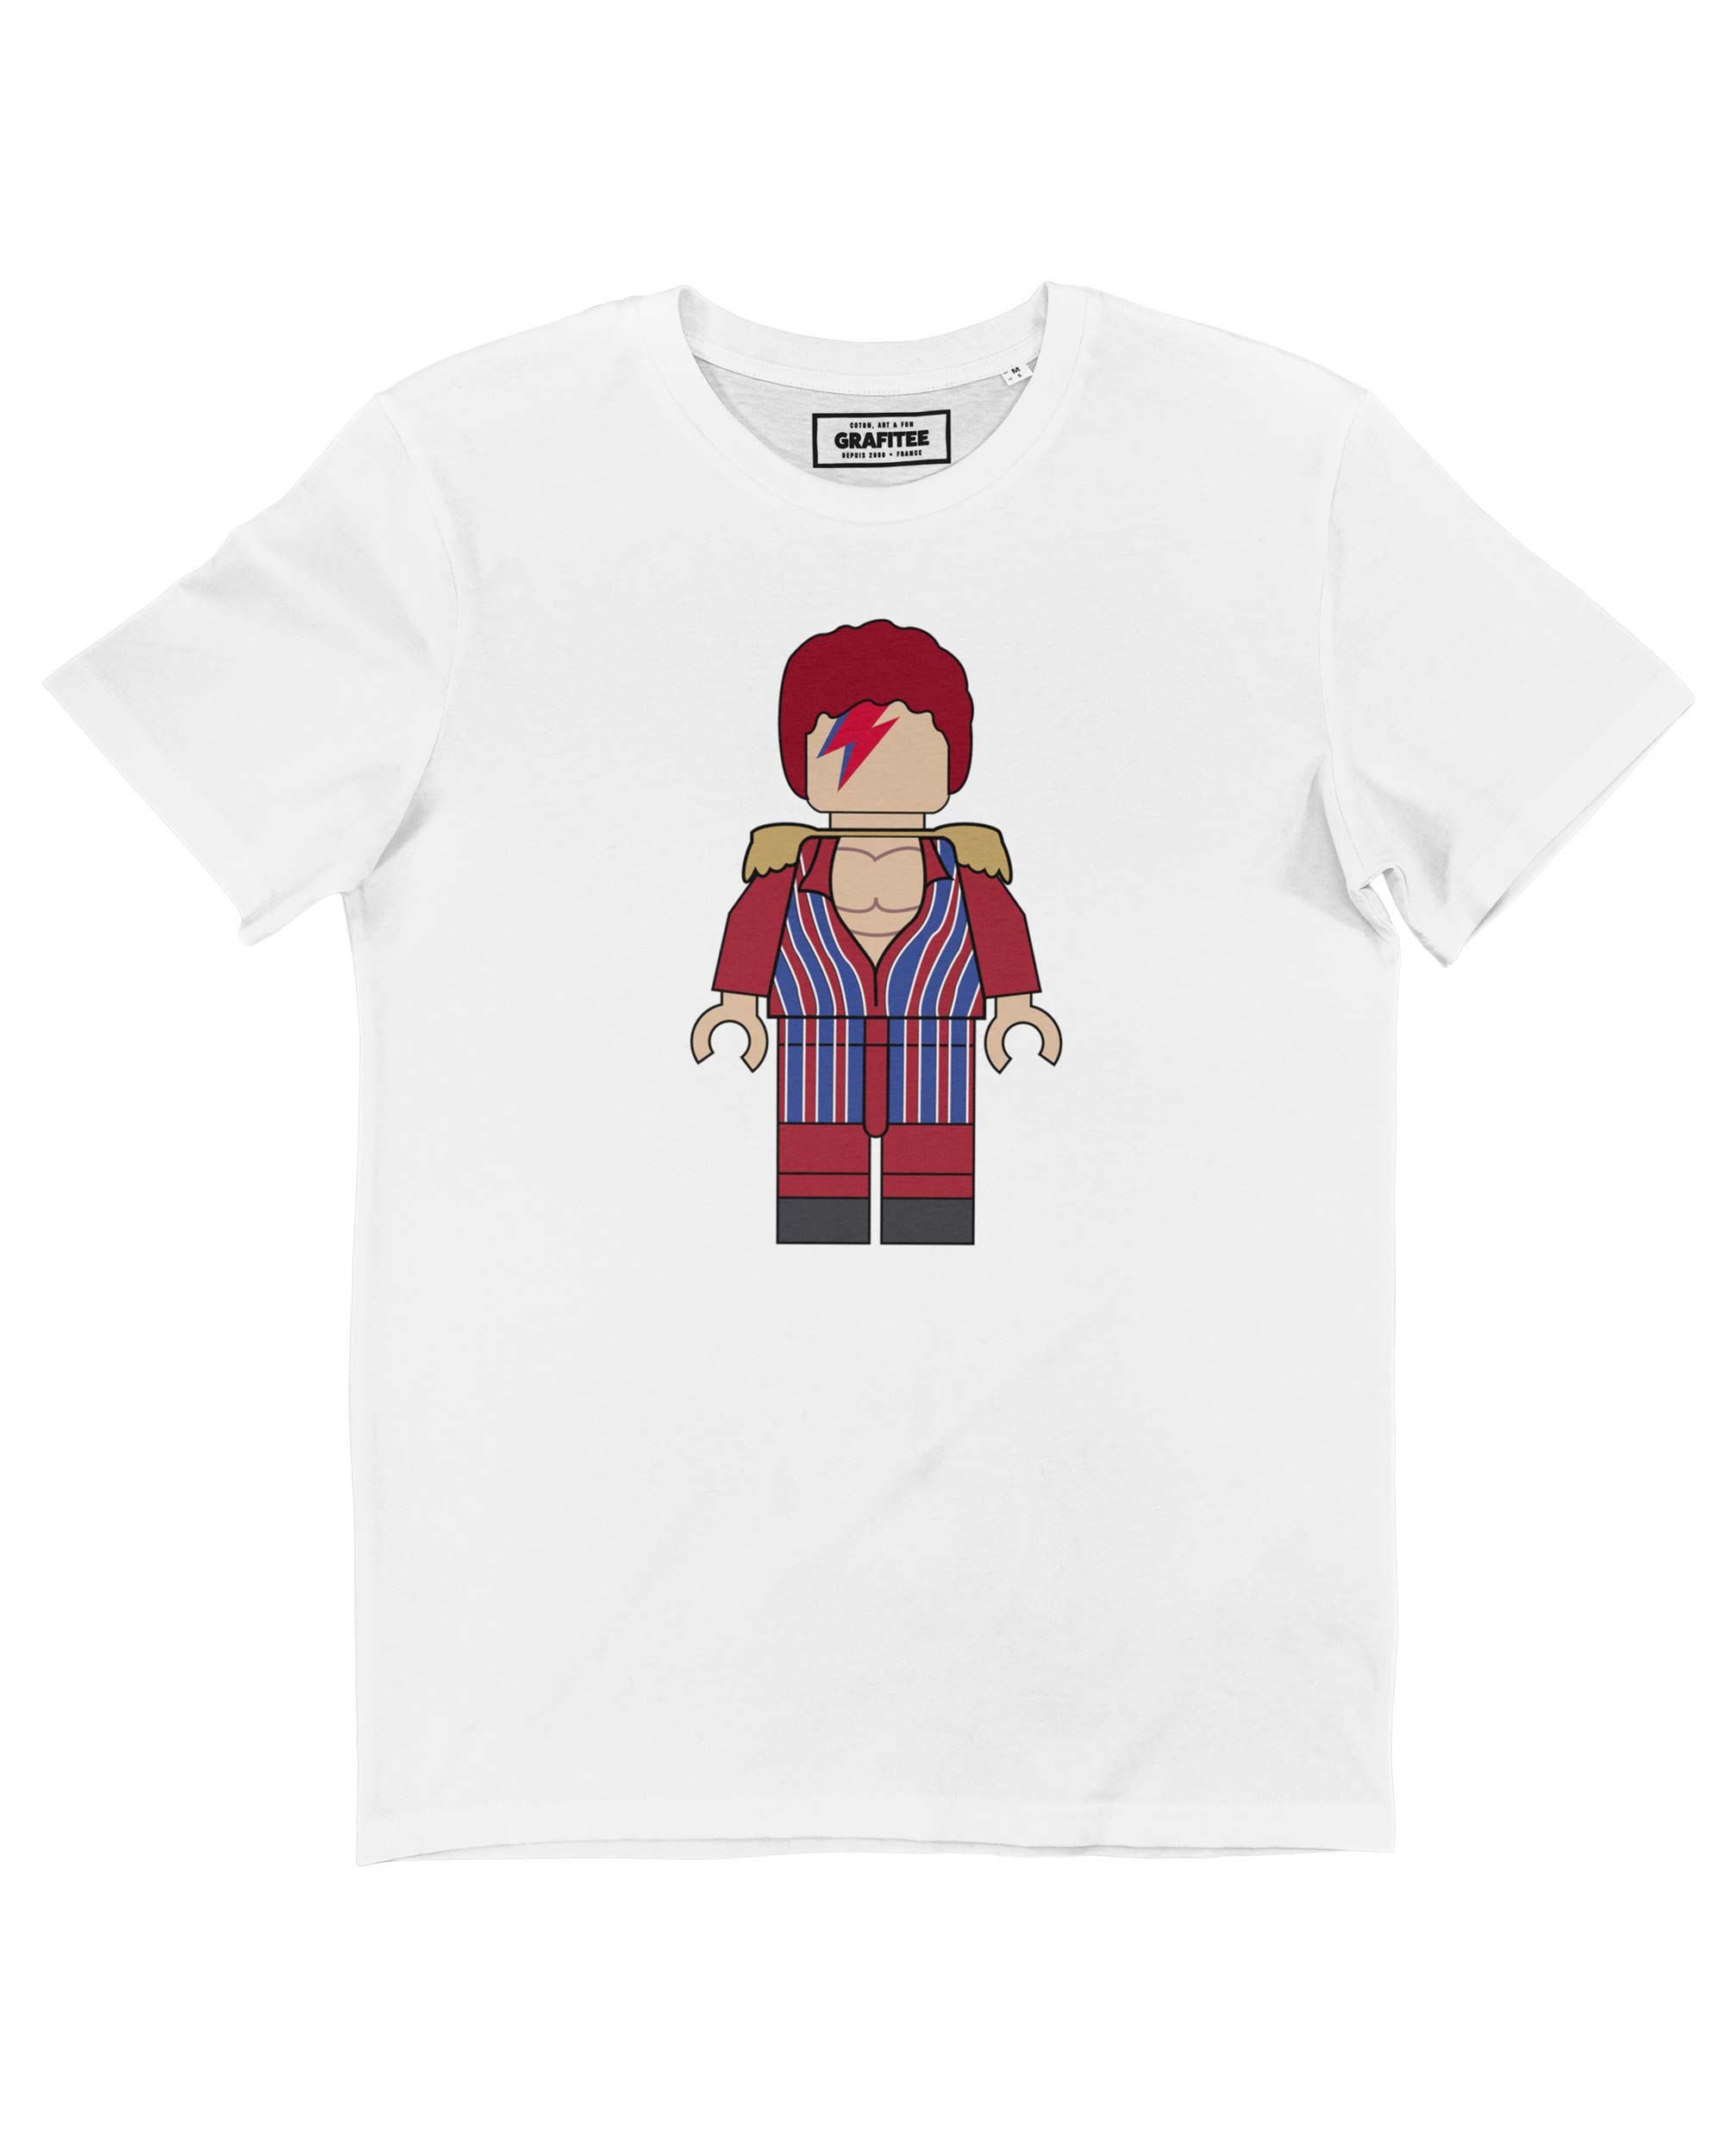 T-shirt Bowie Lego Grafitee